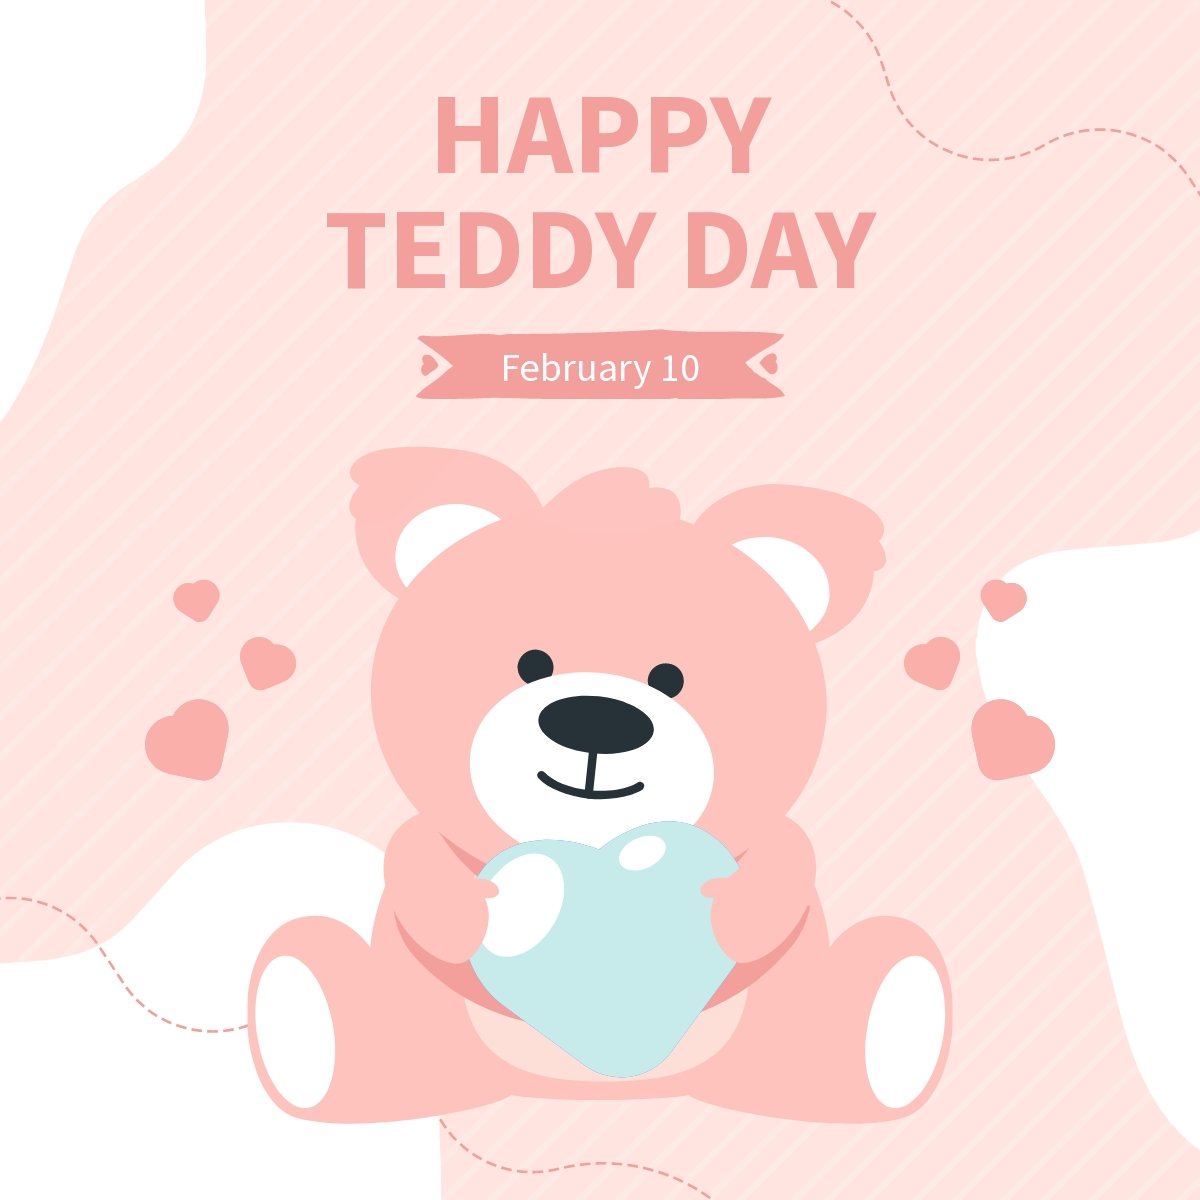 Happy Teddy Day Linkedin Post Template